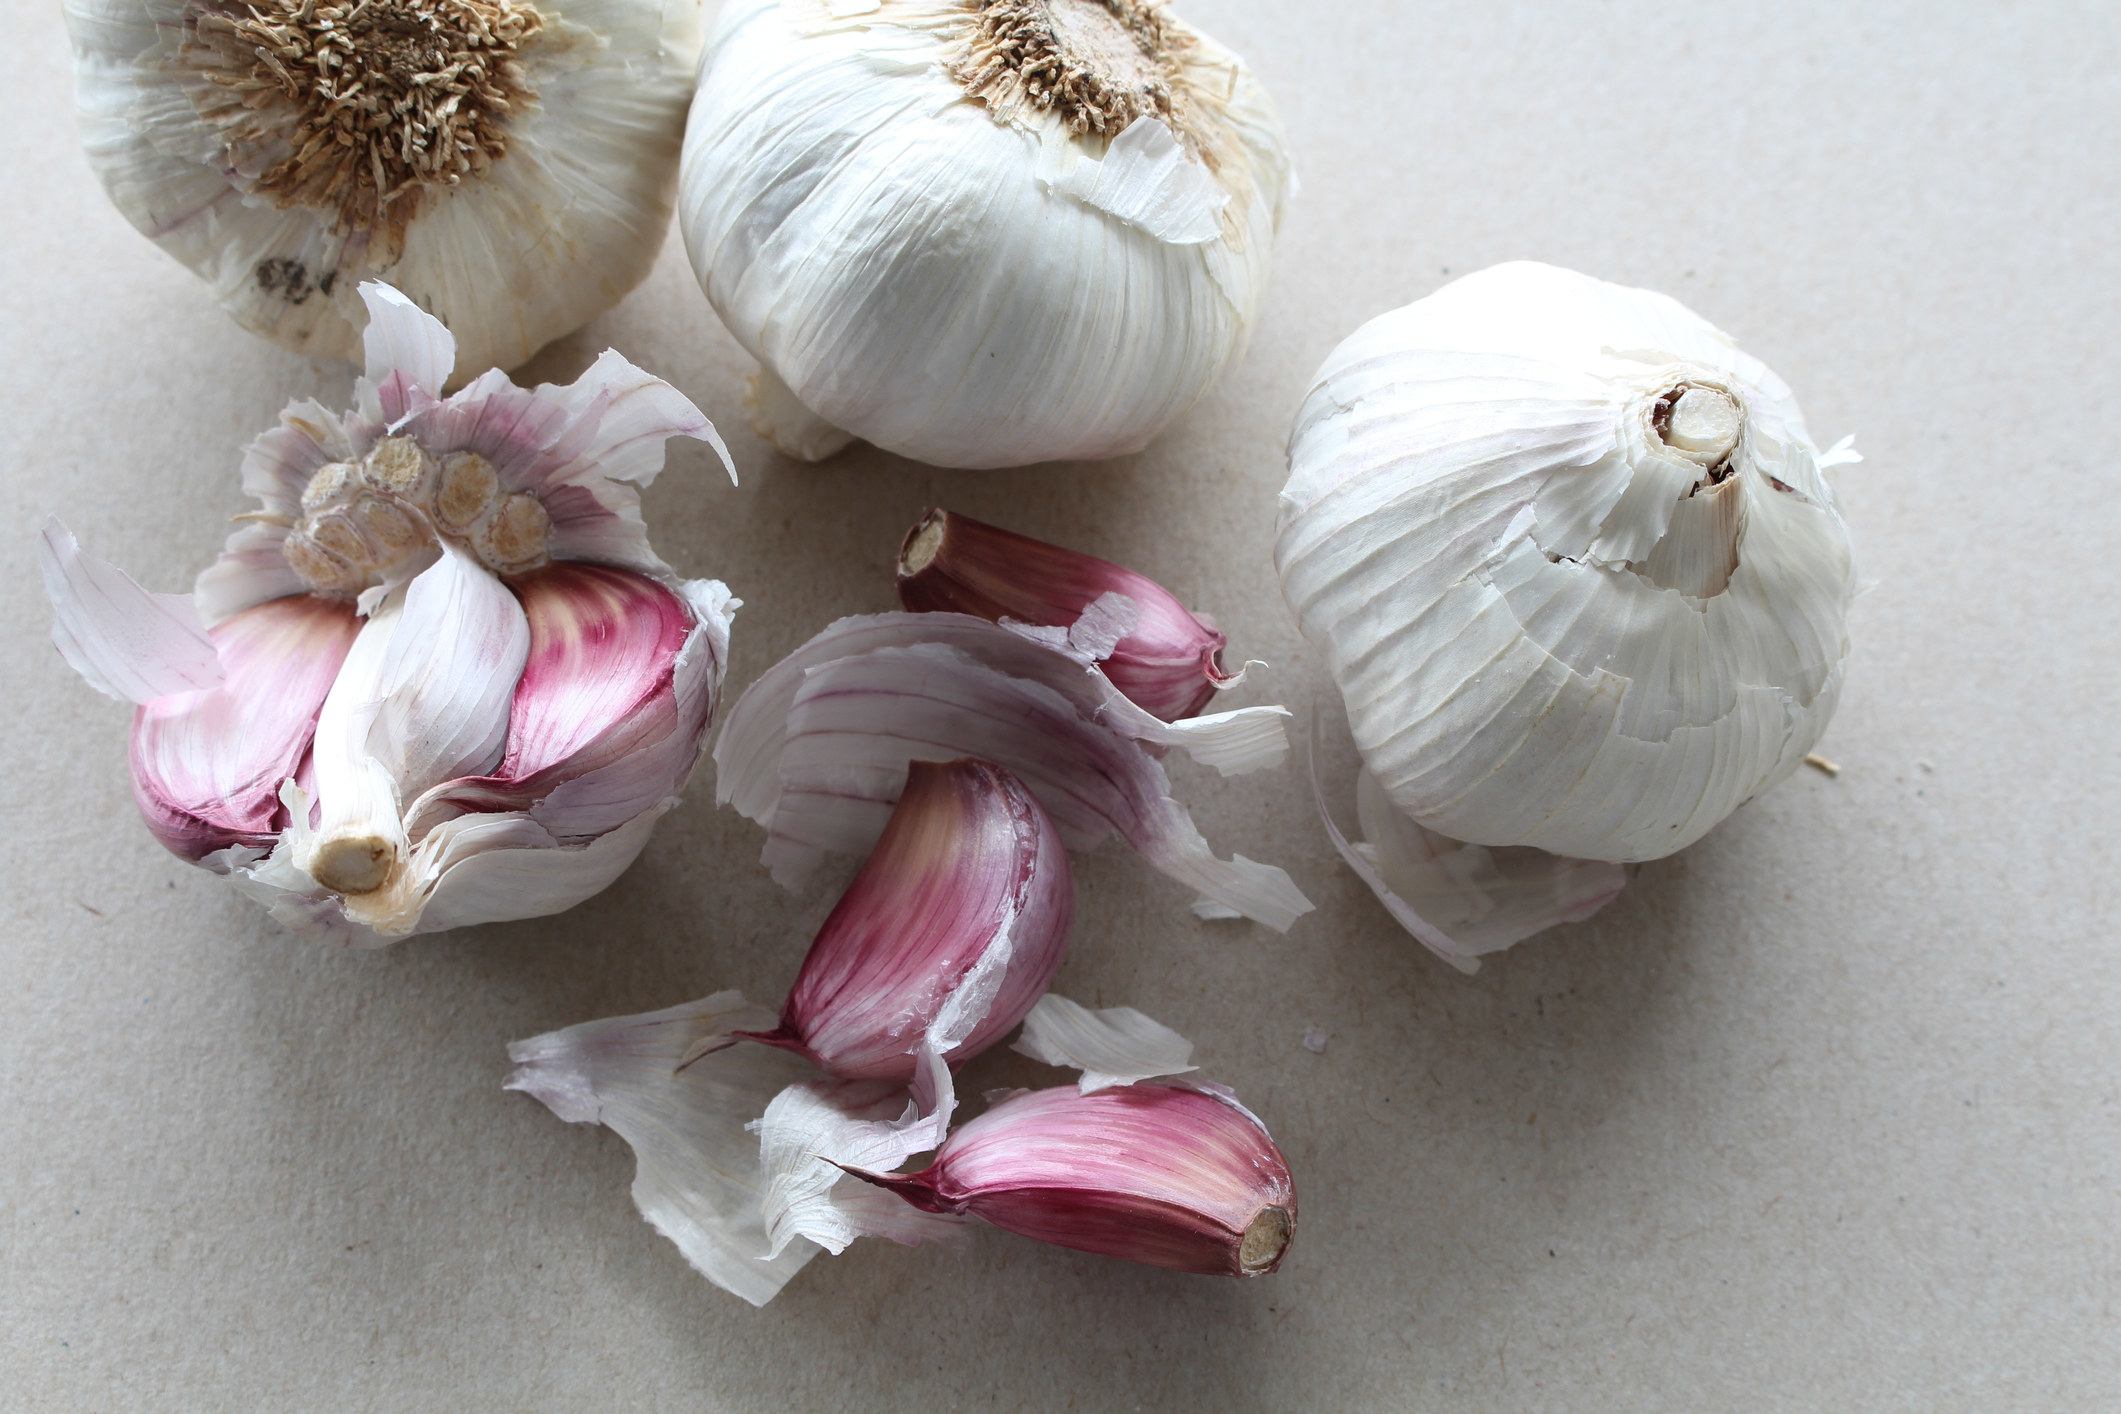 Garlic bulbs, some half peeled